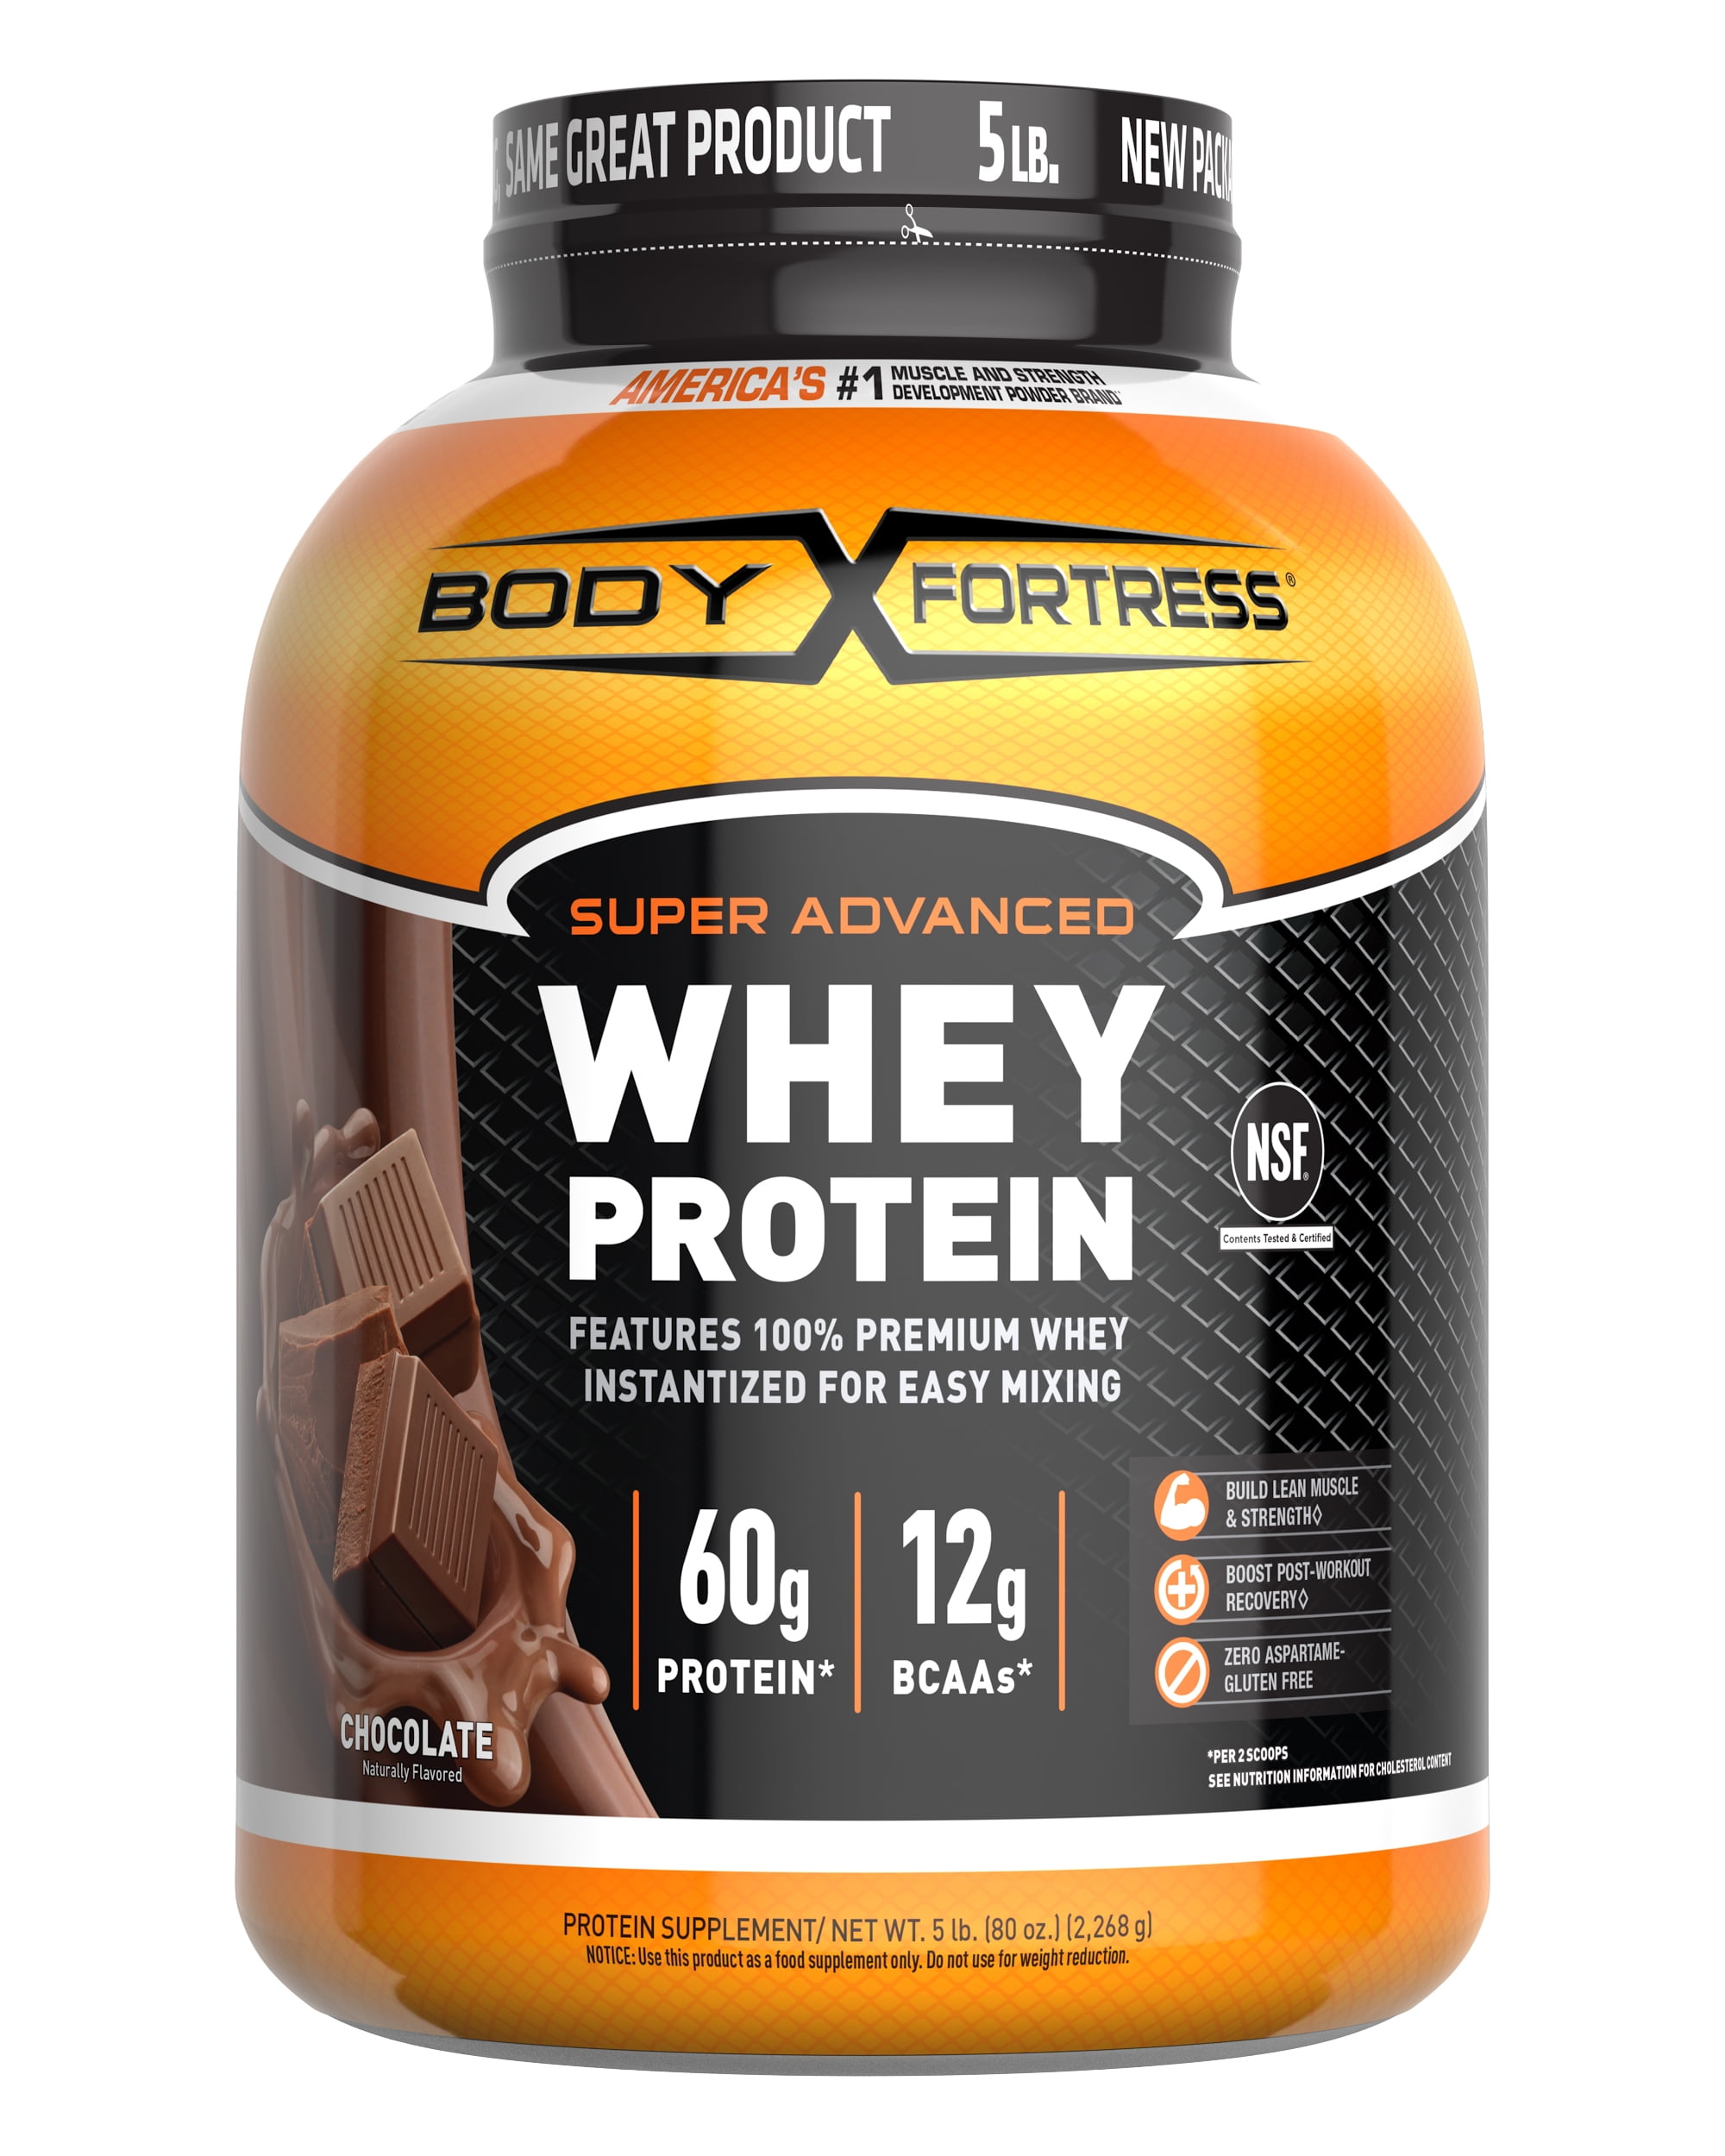 Body Fortress Super Advanced Whey Protein Powder, Chocolate, 60g